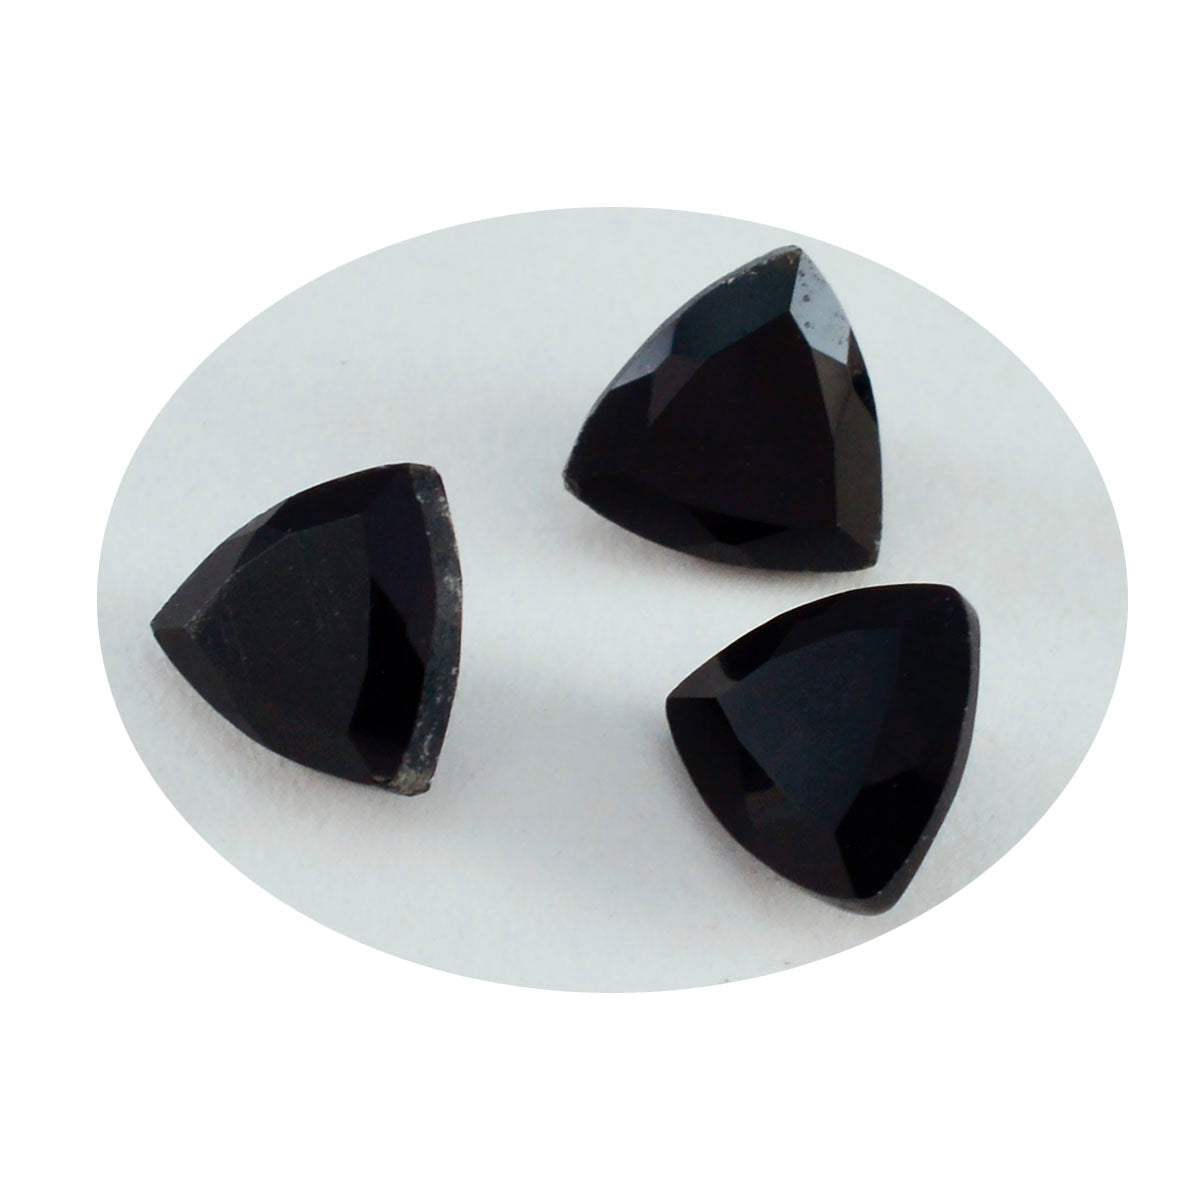 Riyogems 1PC Genuine Black Onyx Faceted 12x12 mm Trillion Shape handsome Quality Loose Gemstone